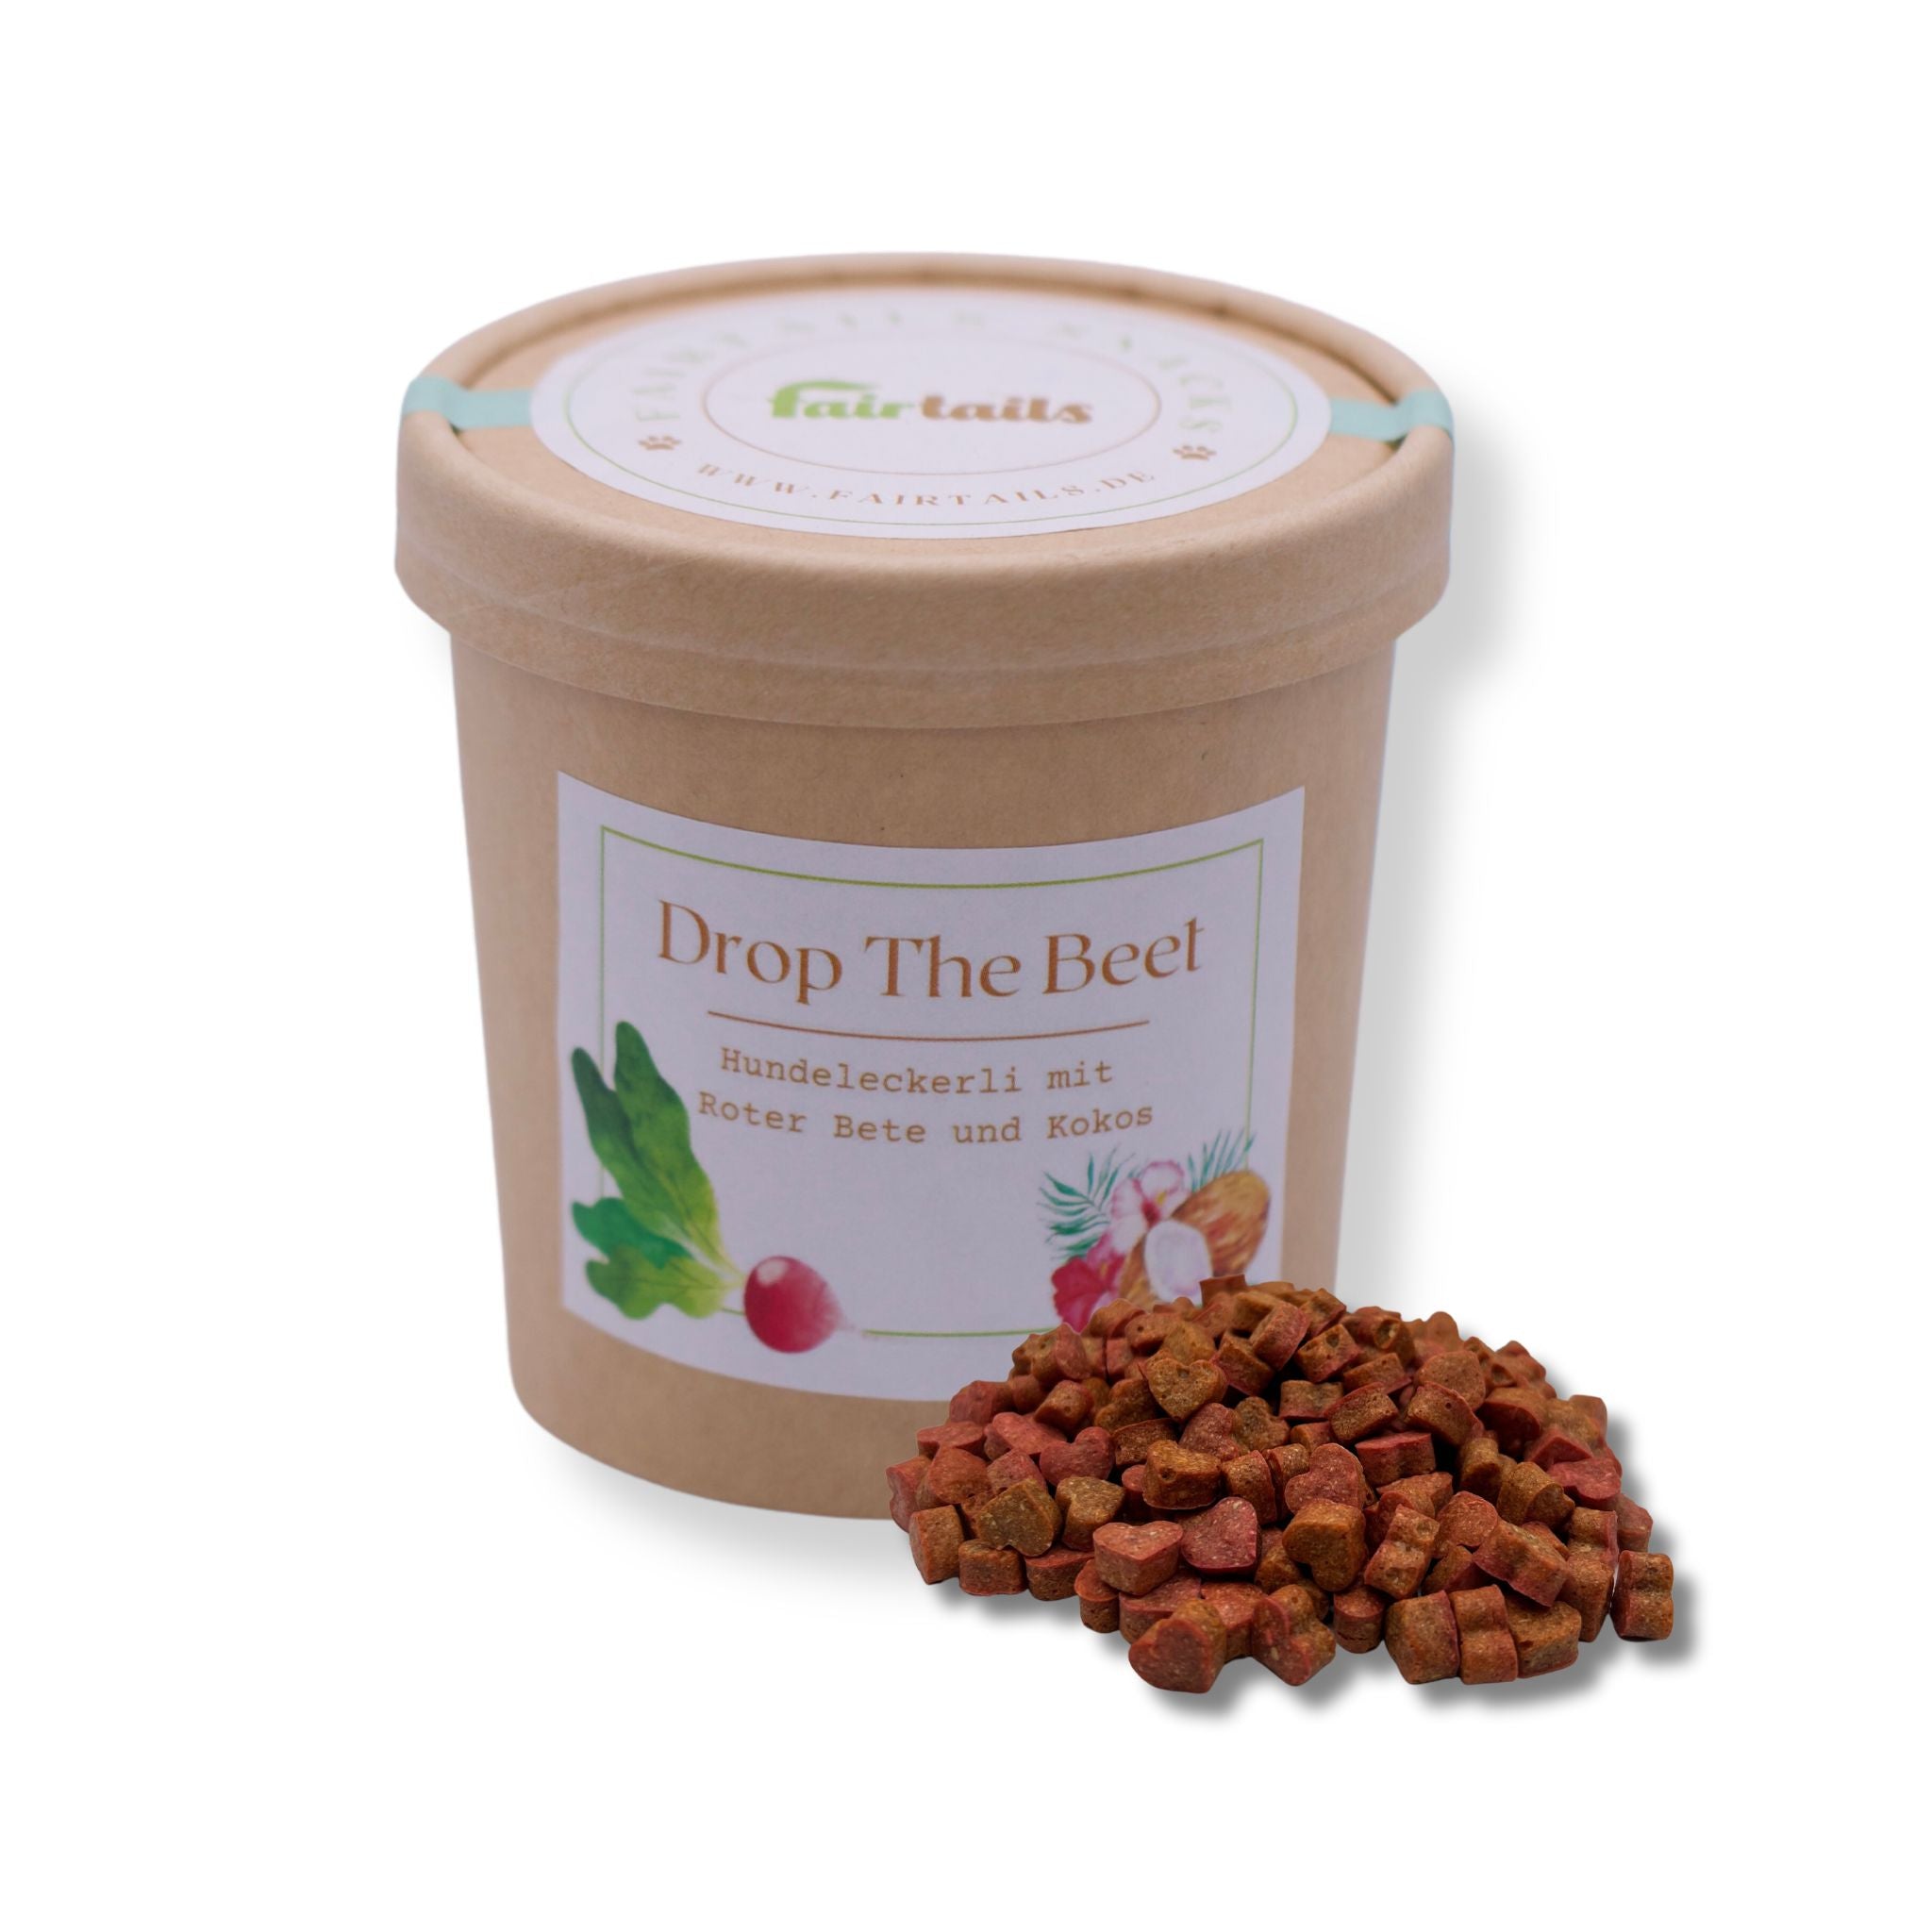 Fairtails Drop The Beet - Vegane Hundeleckerli Kokos und Roter Bete (100g)